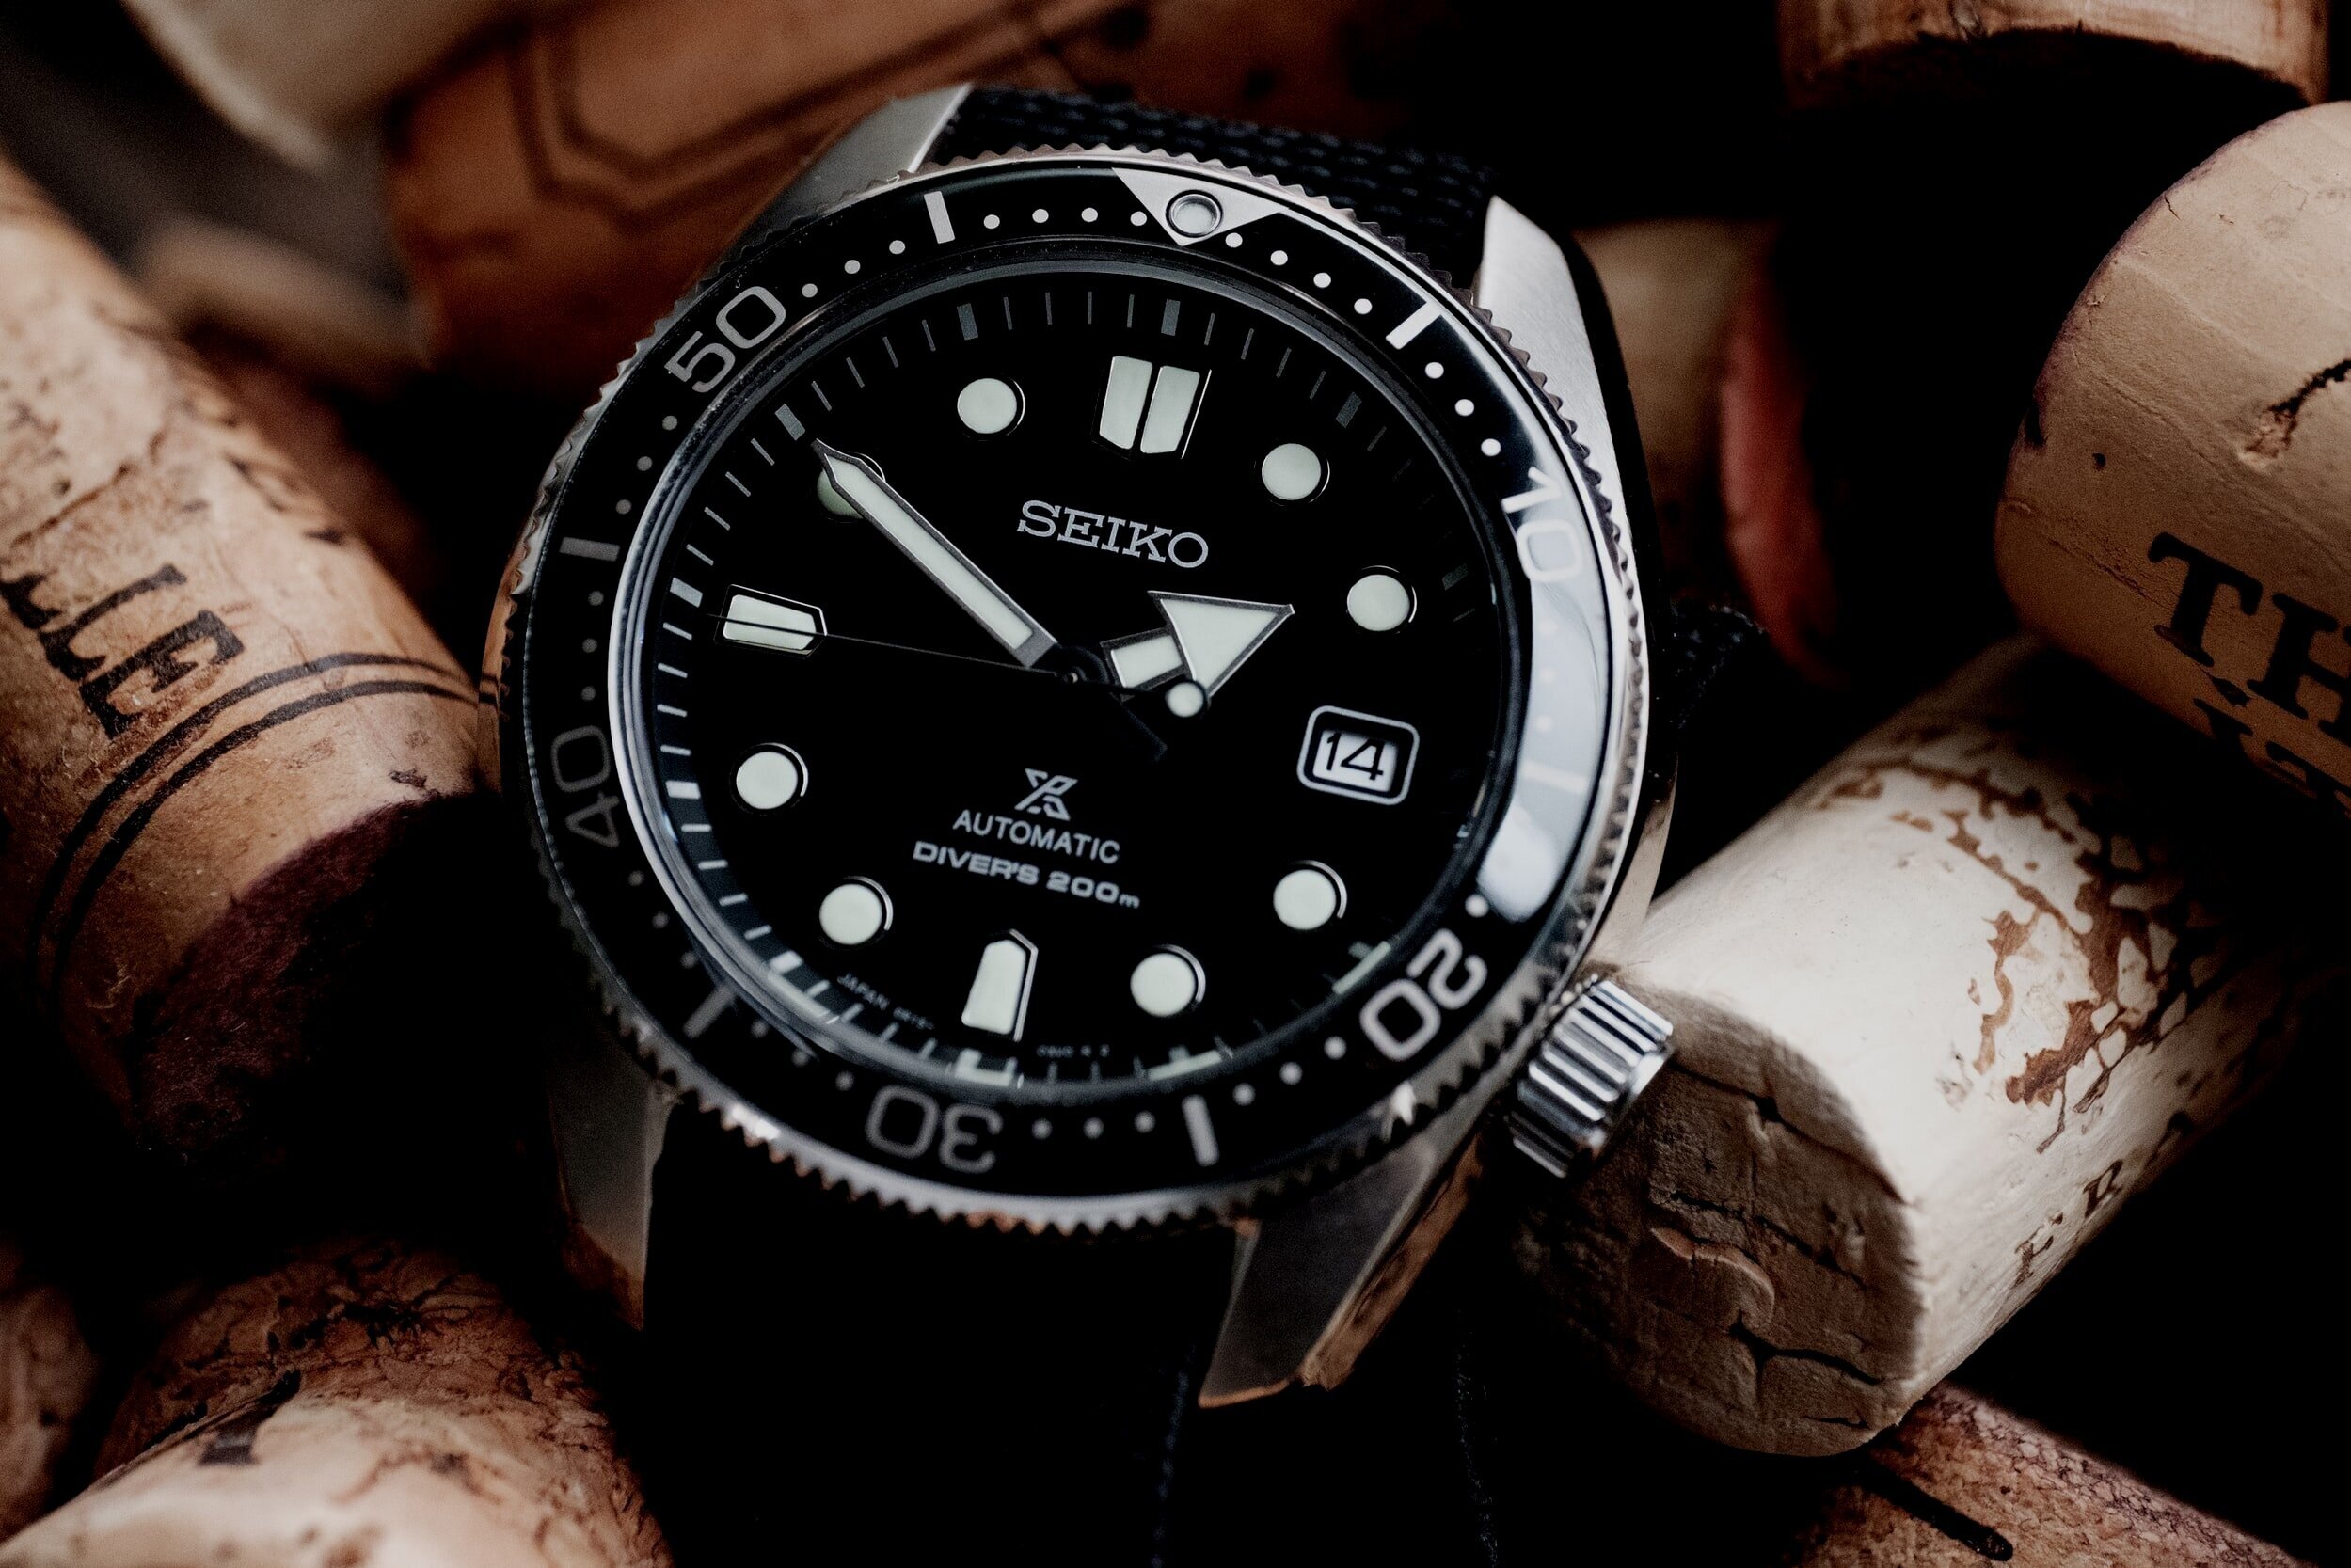 Can a watchmaker repair a Seiko watch?